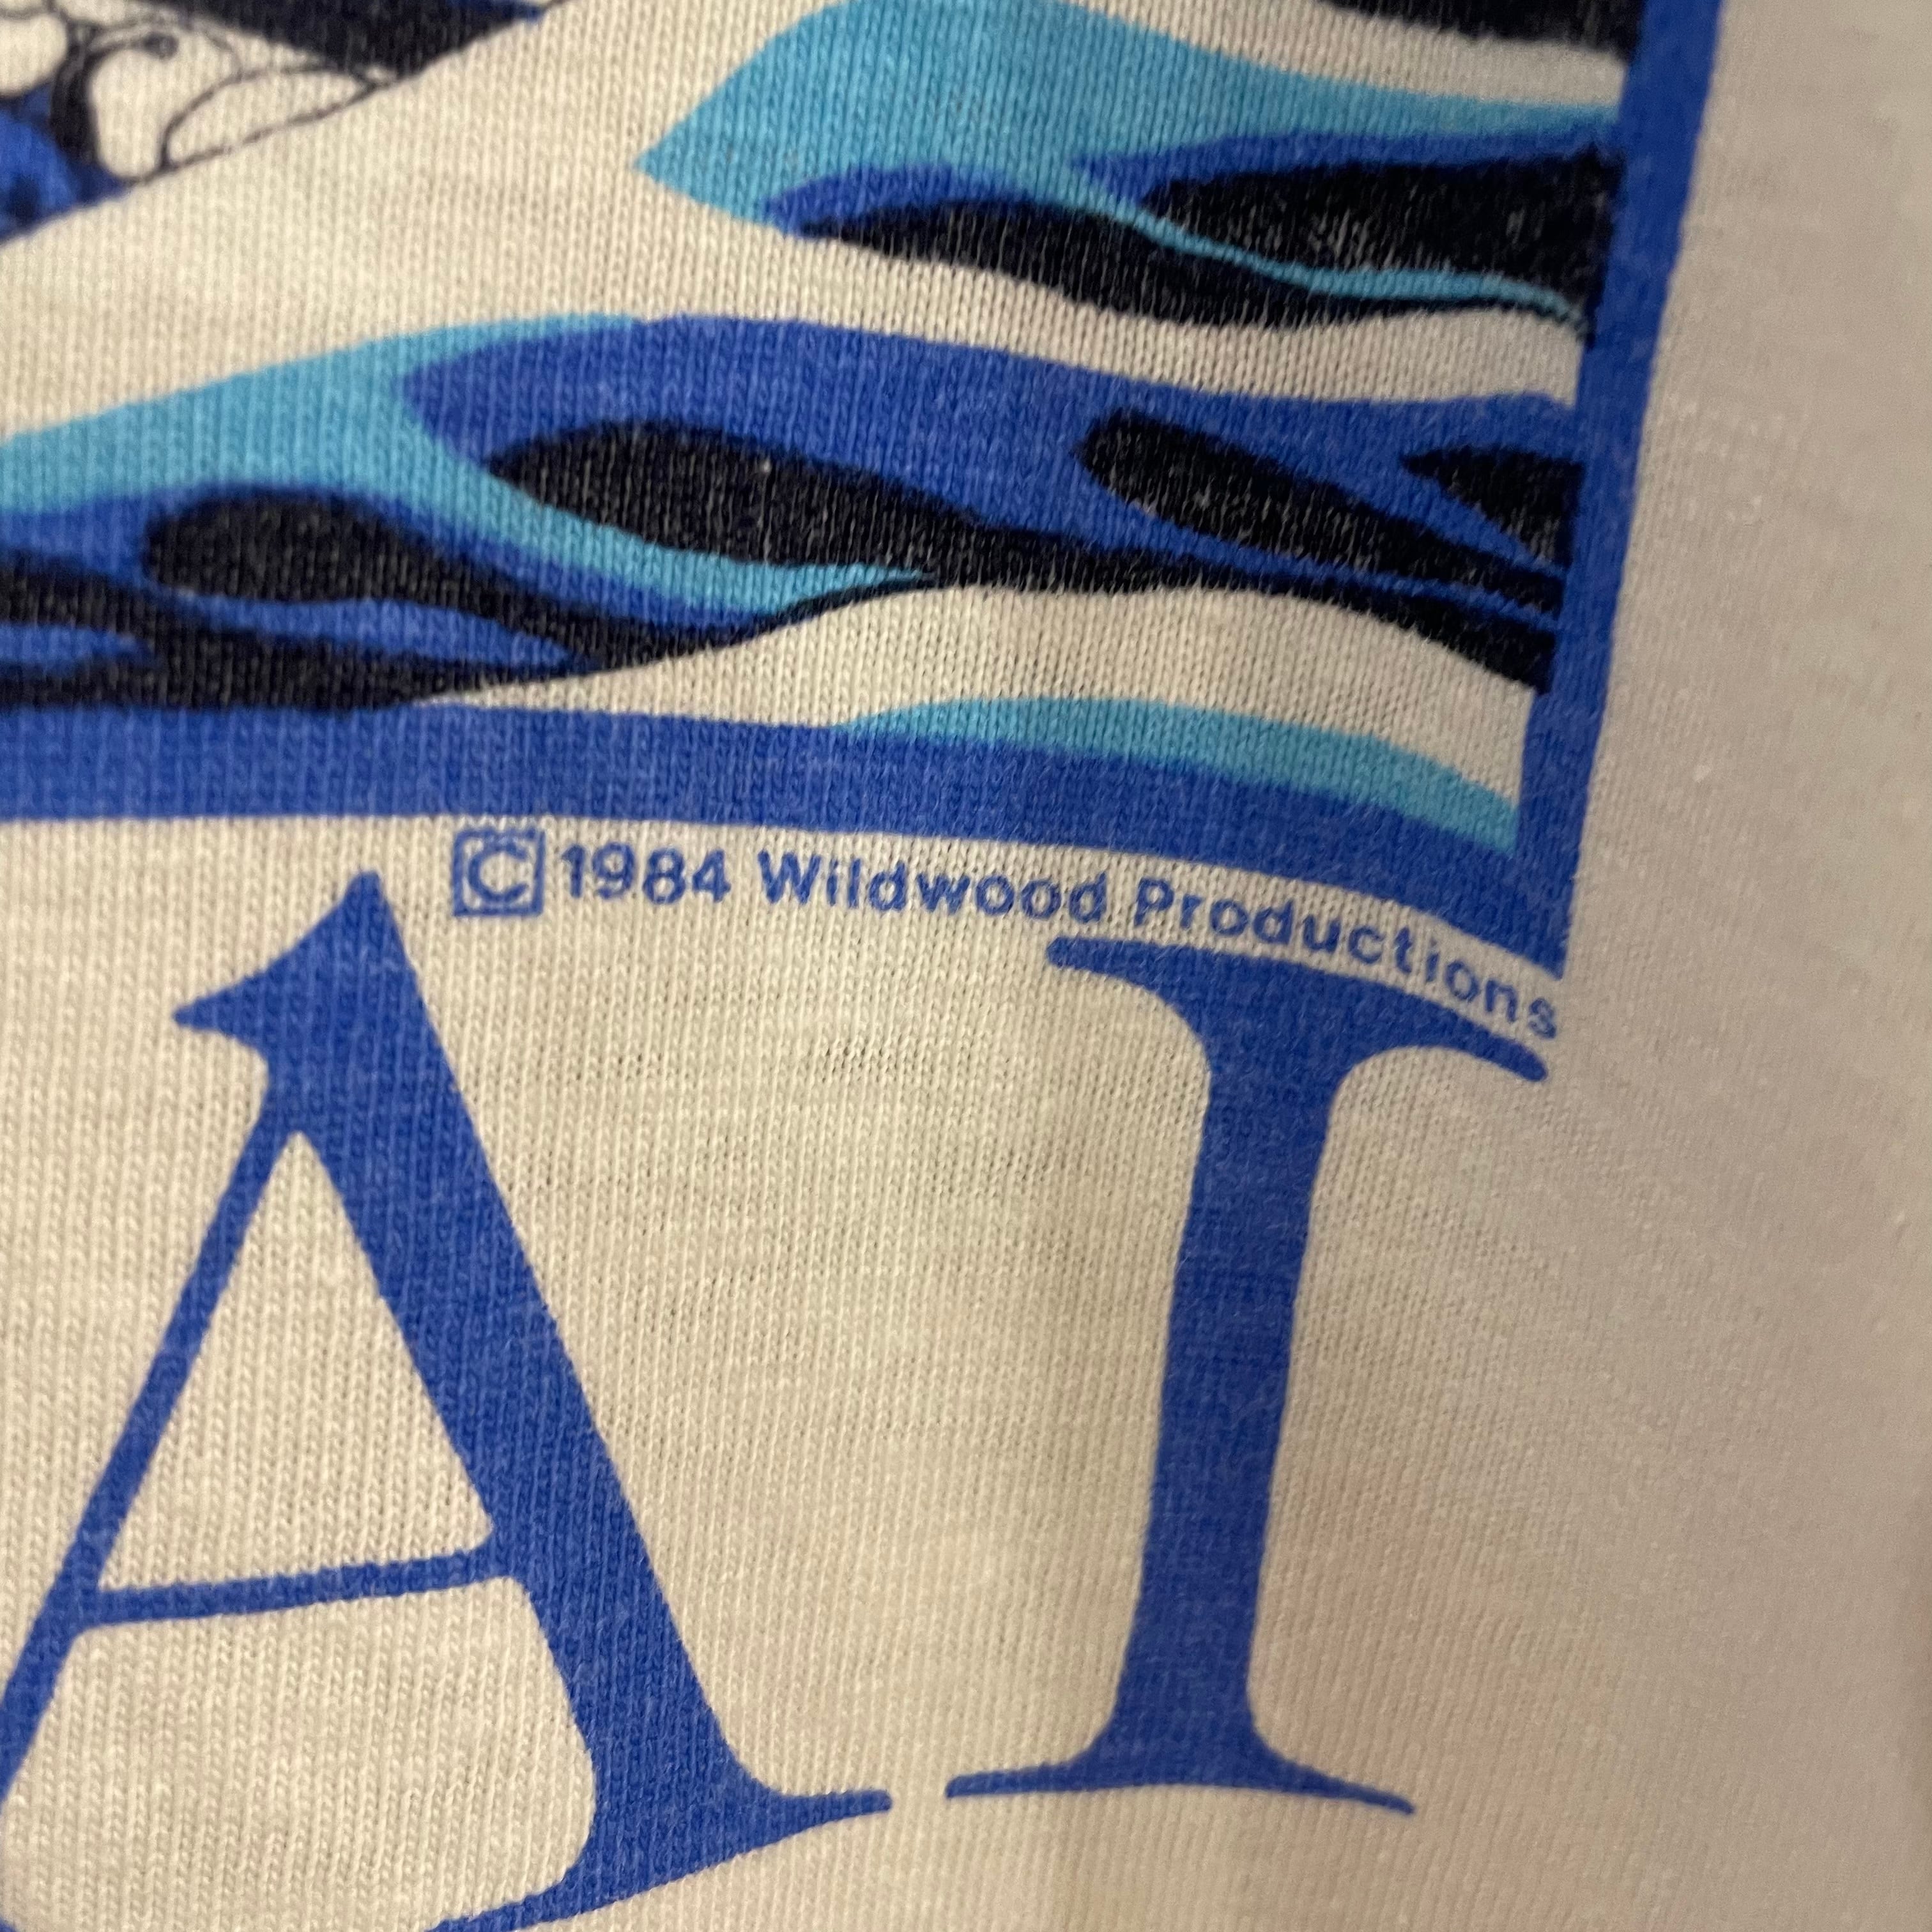 1984 Wildwood productions葛飾北斎 富嶽三十六景Tシャツ